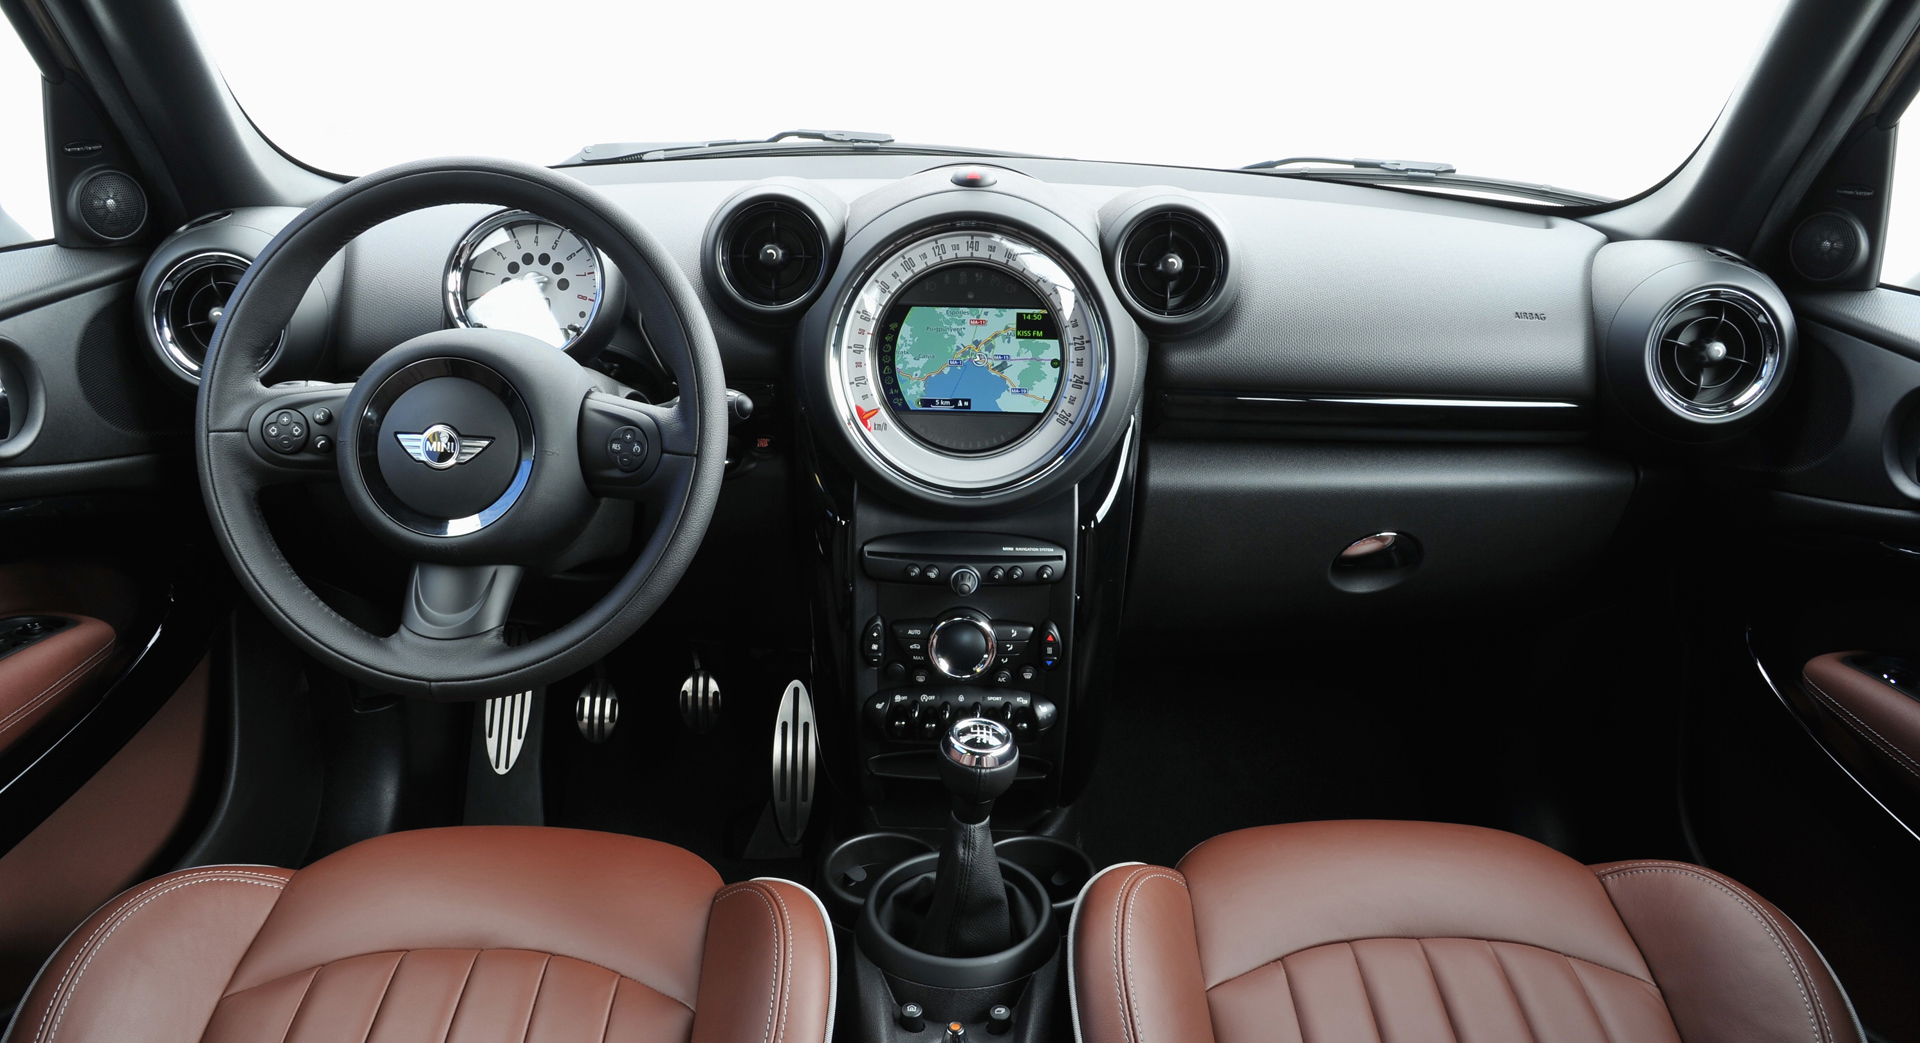 BMWBLOG Test Drive: 2013 MINI Cooper S Paceman